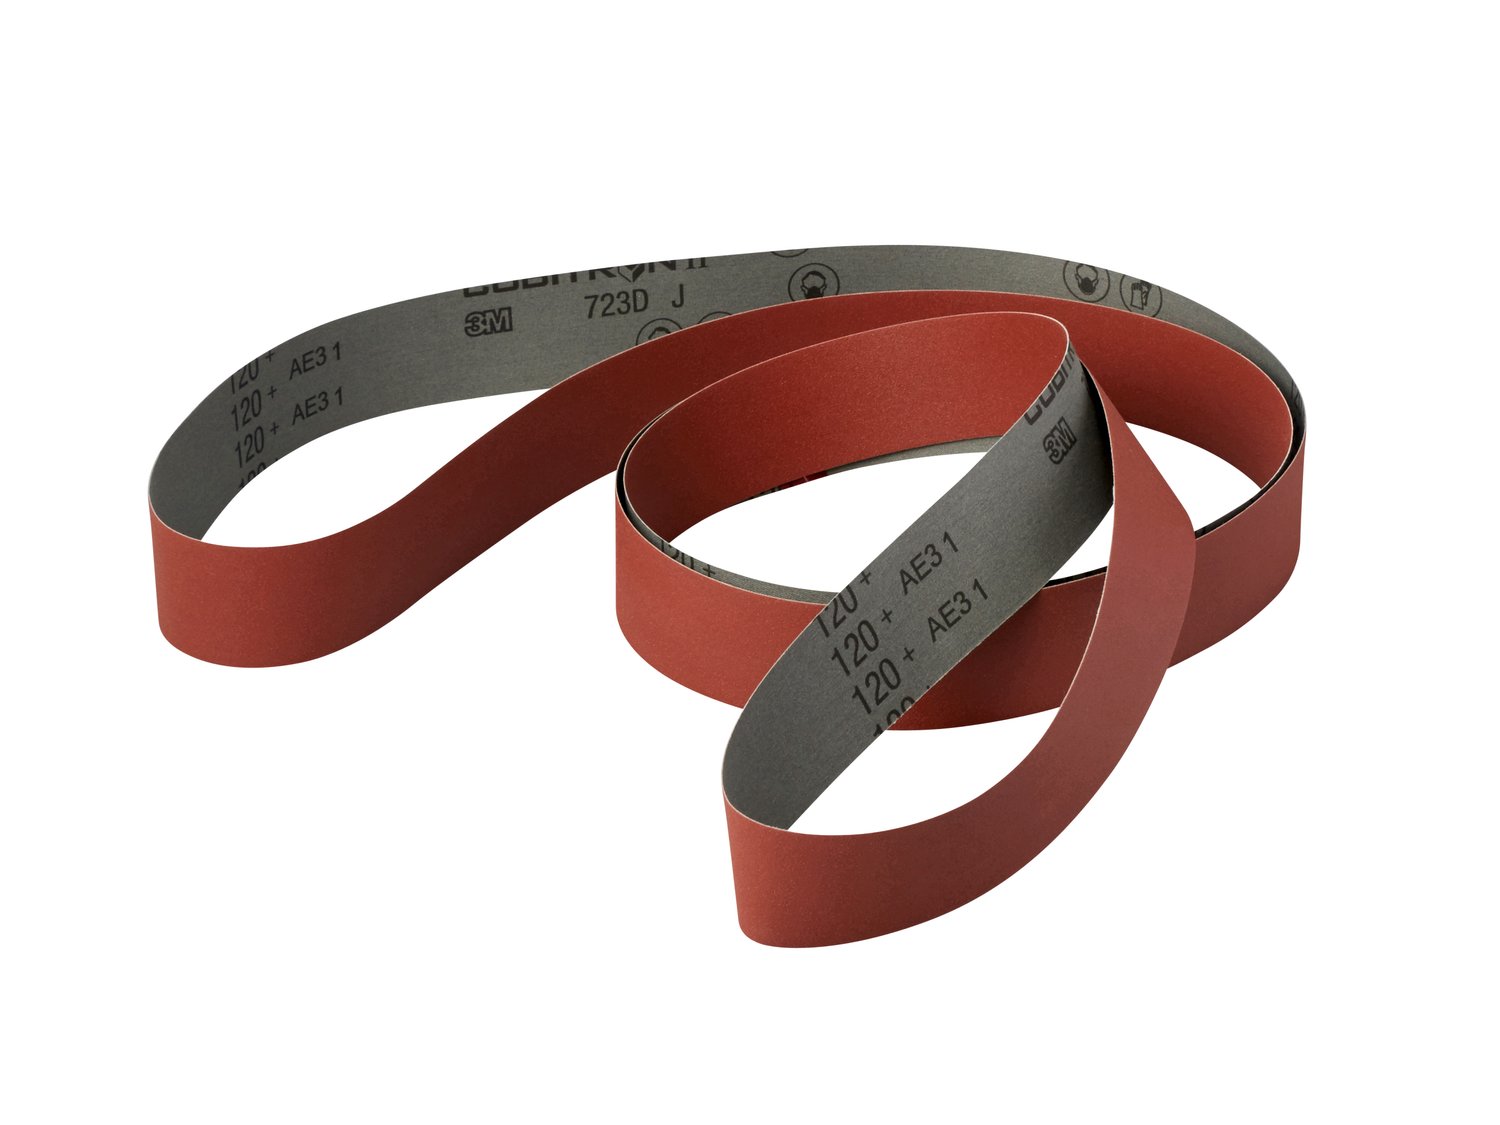 7010362603 - 3M Cubitron ll Cloth Belt 723D, 220+ J-weight, 3 in x 132 in,
Film-lok, Full-flex, 25 ea/Case